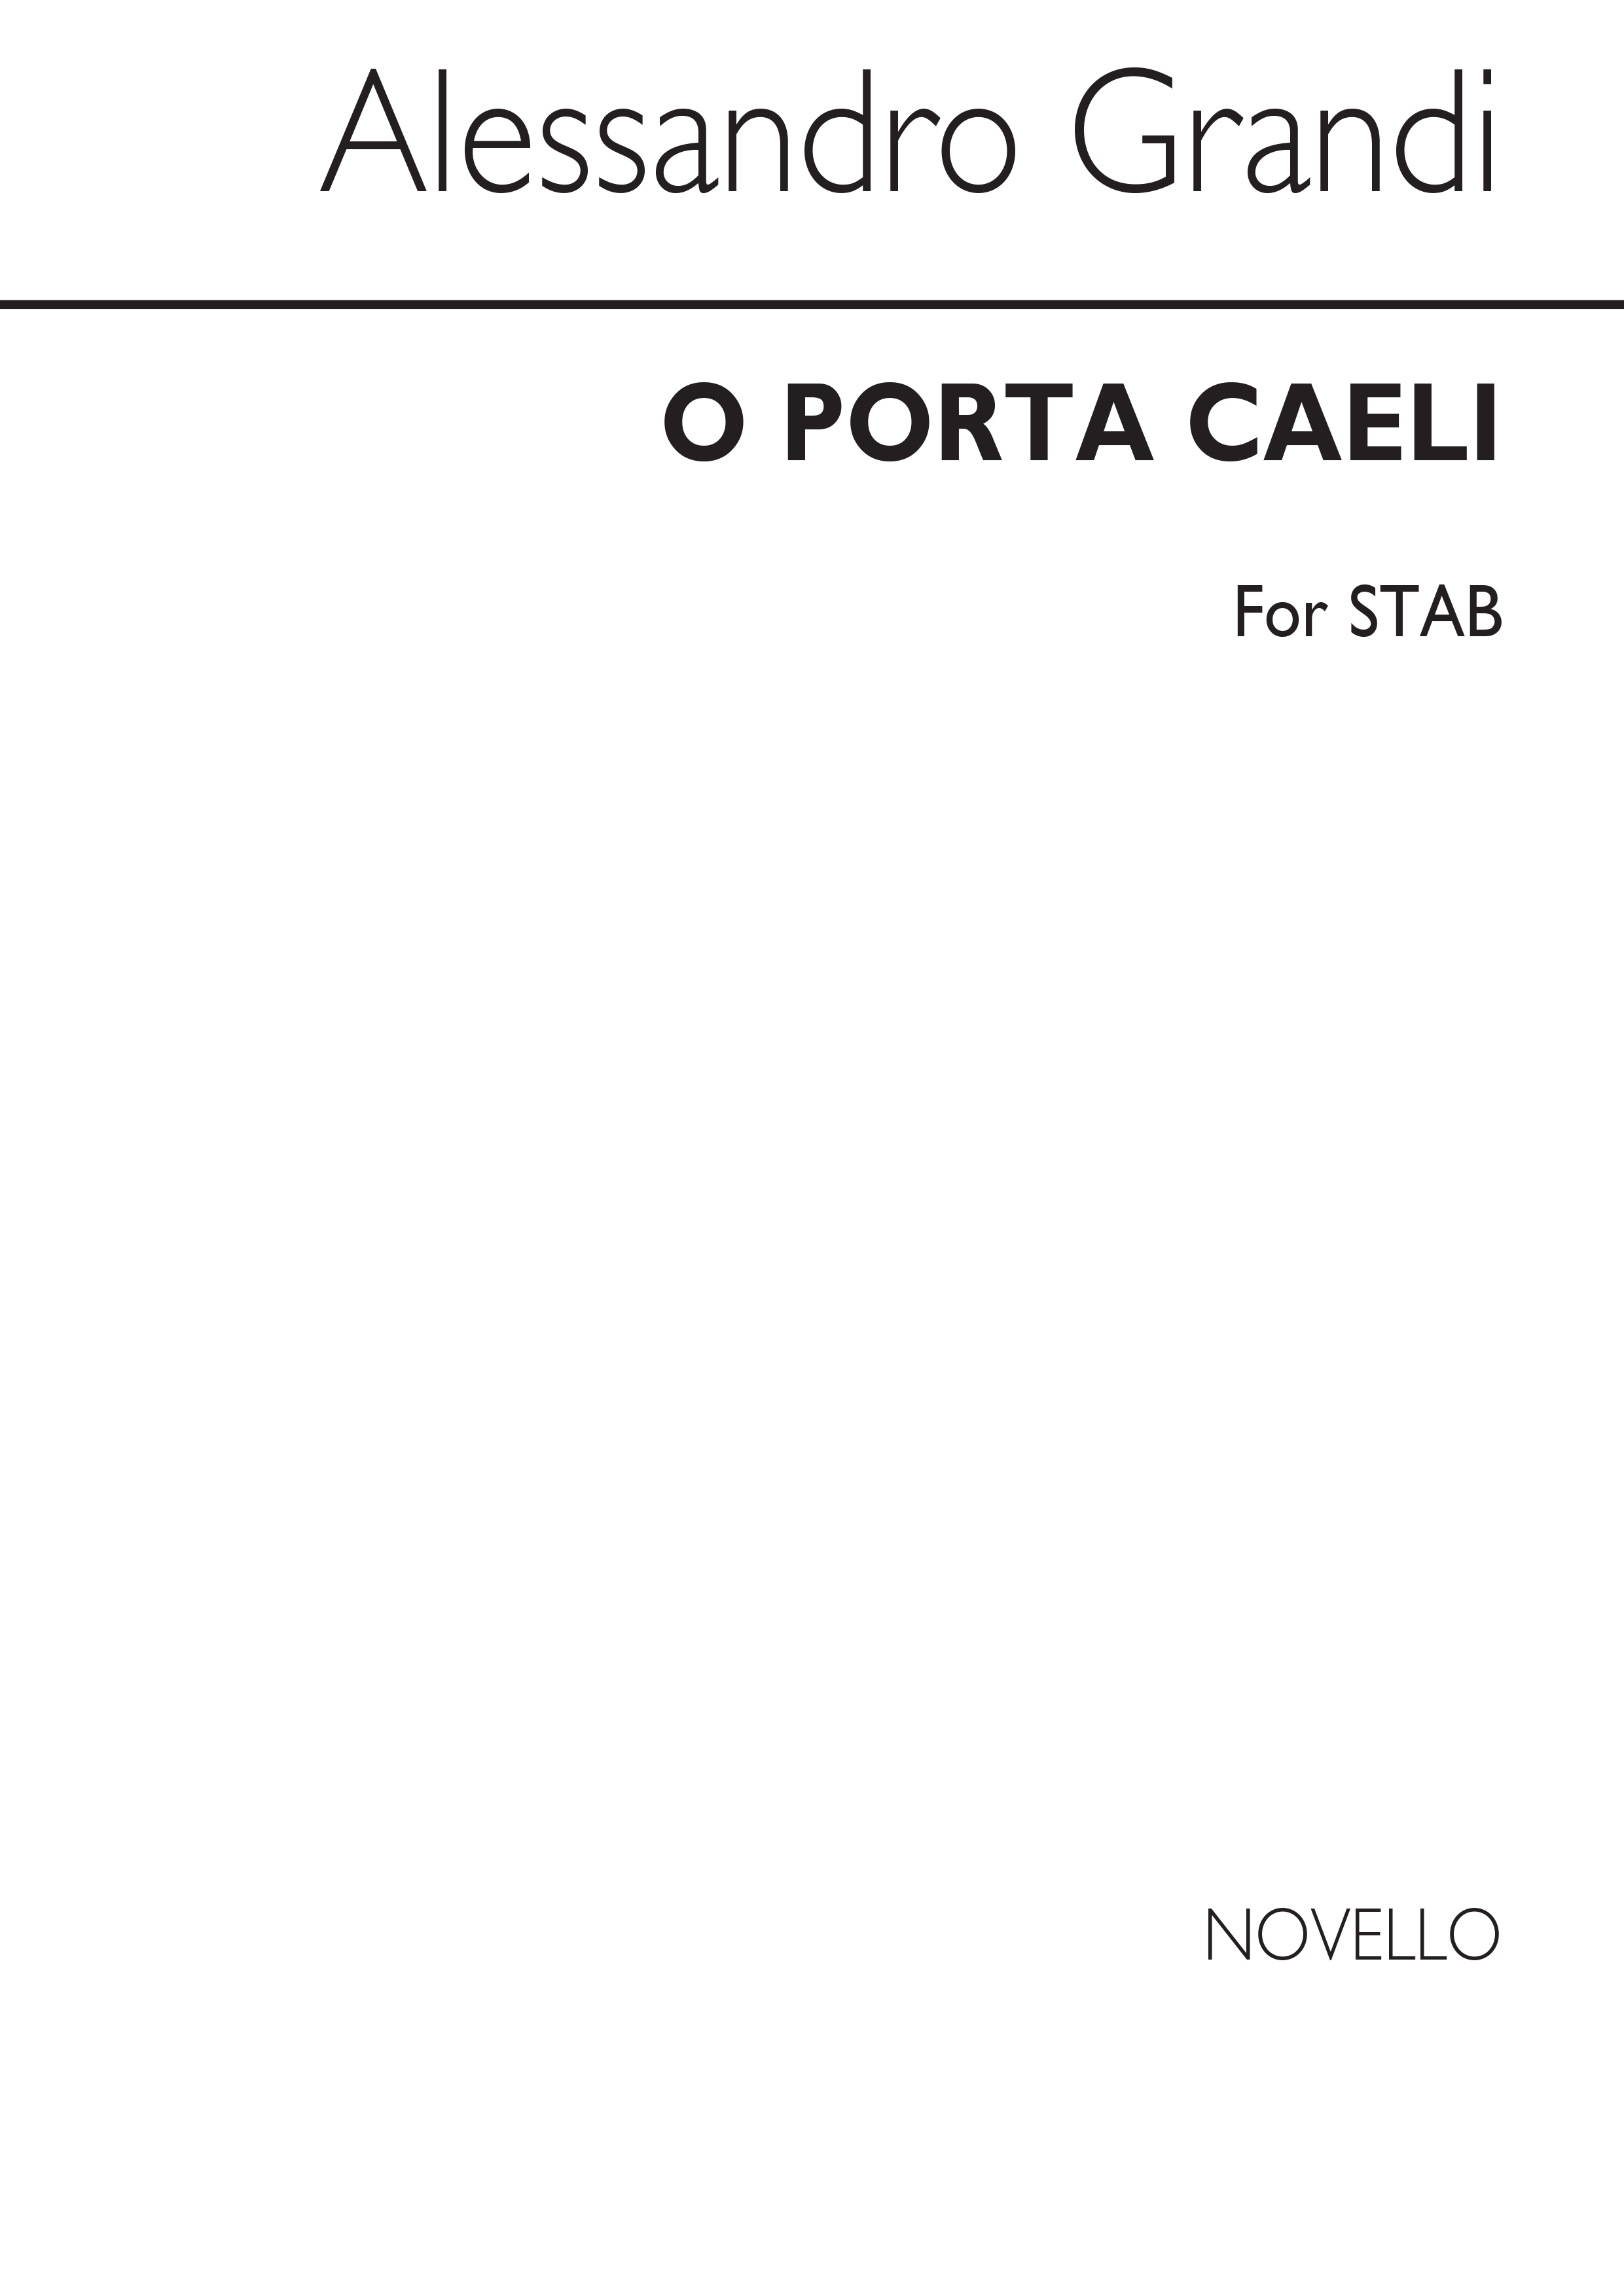 Grandi: O Porta Caeli for SATB Chorus